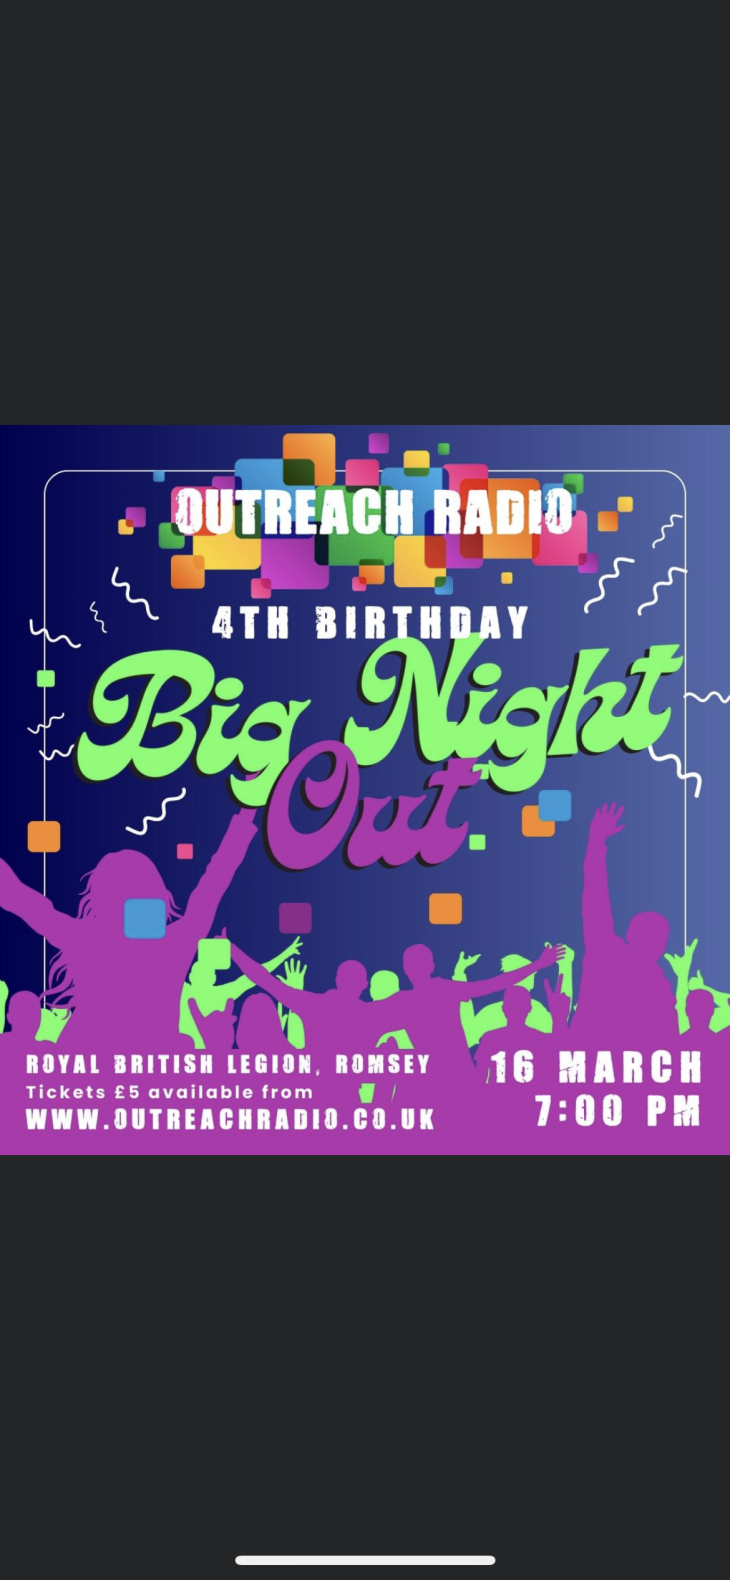 Outreach Radio Big Party Night